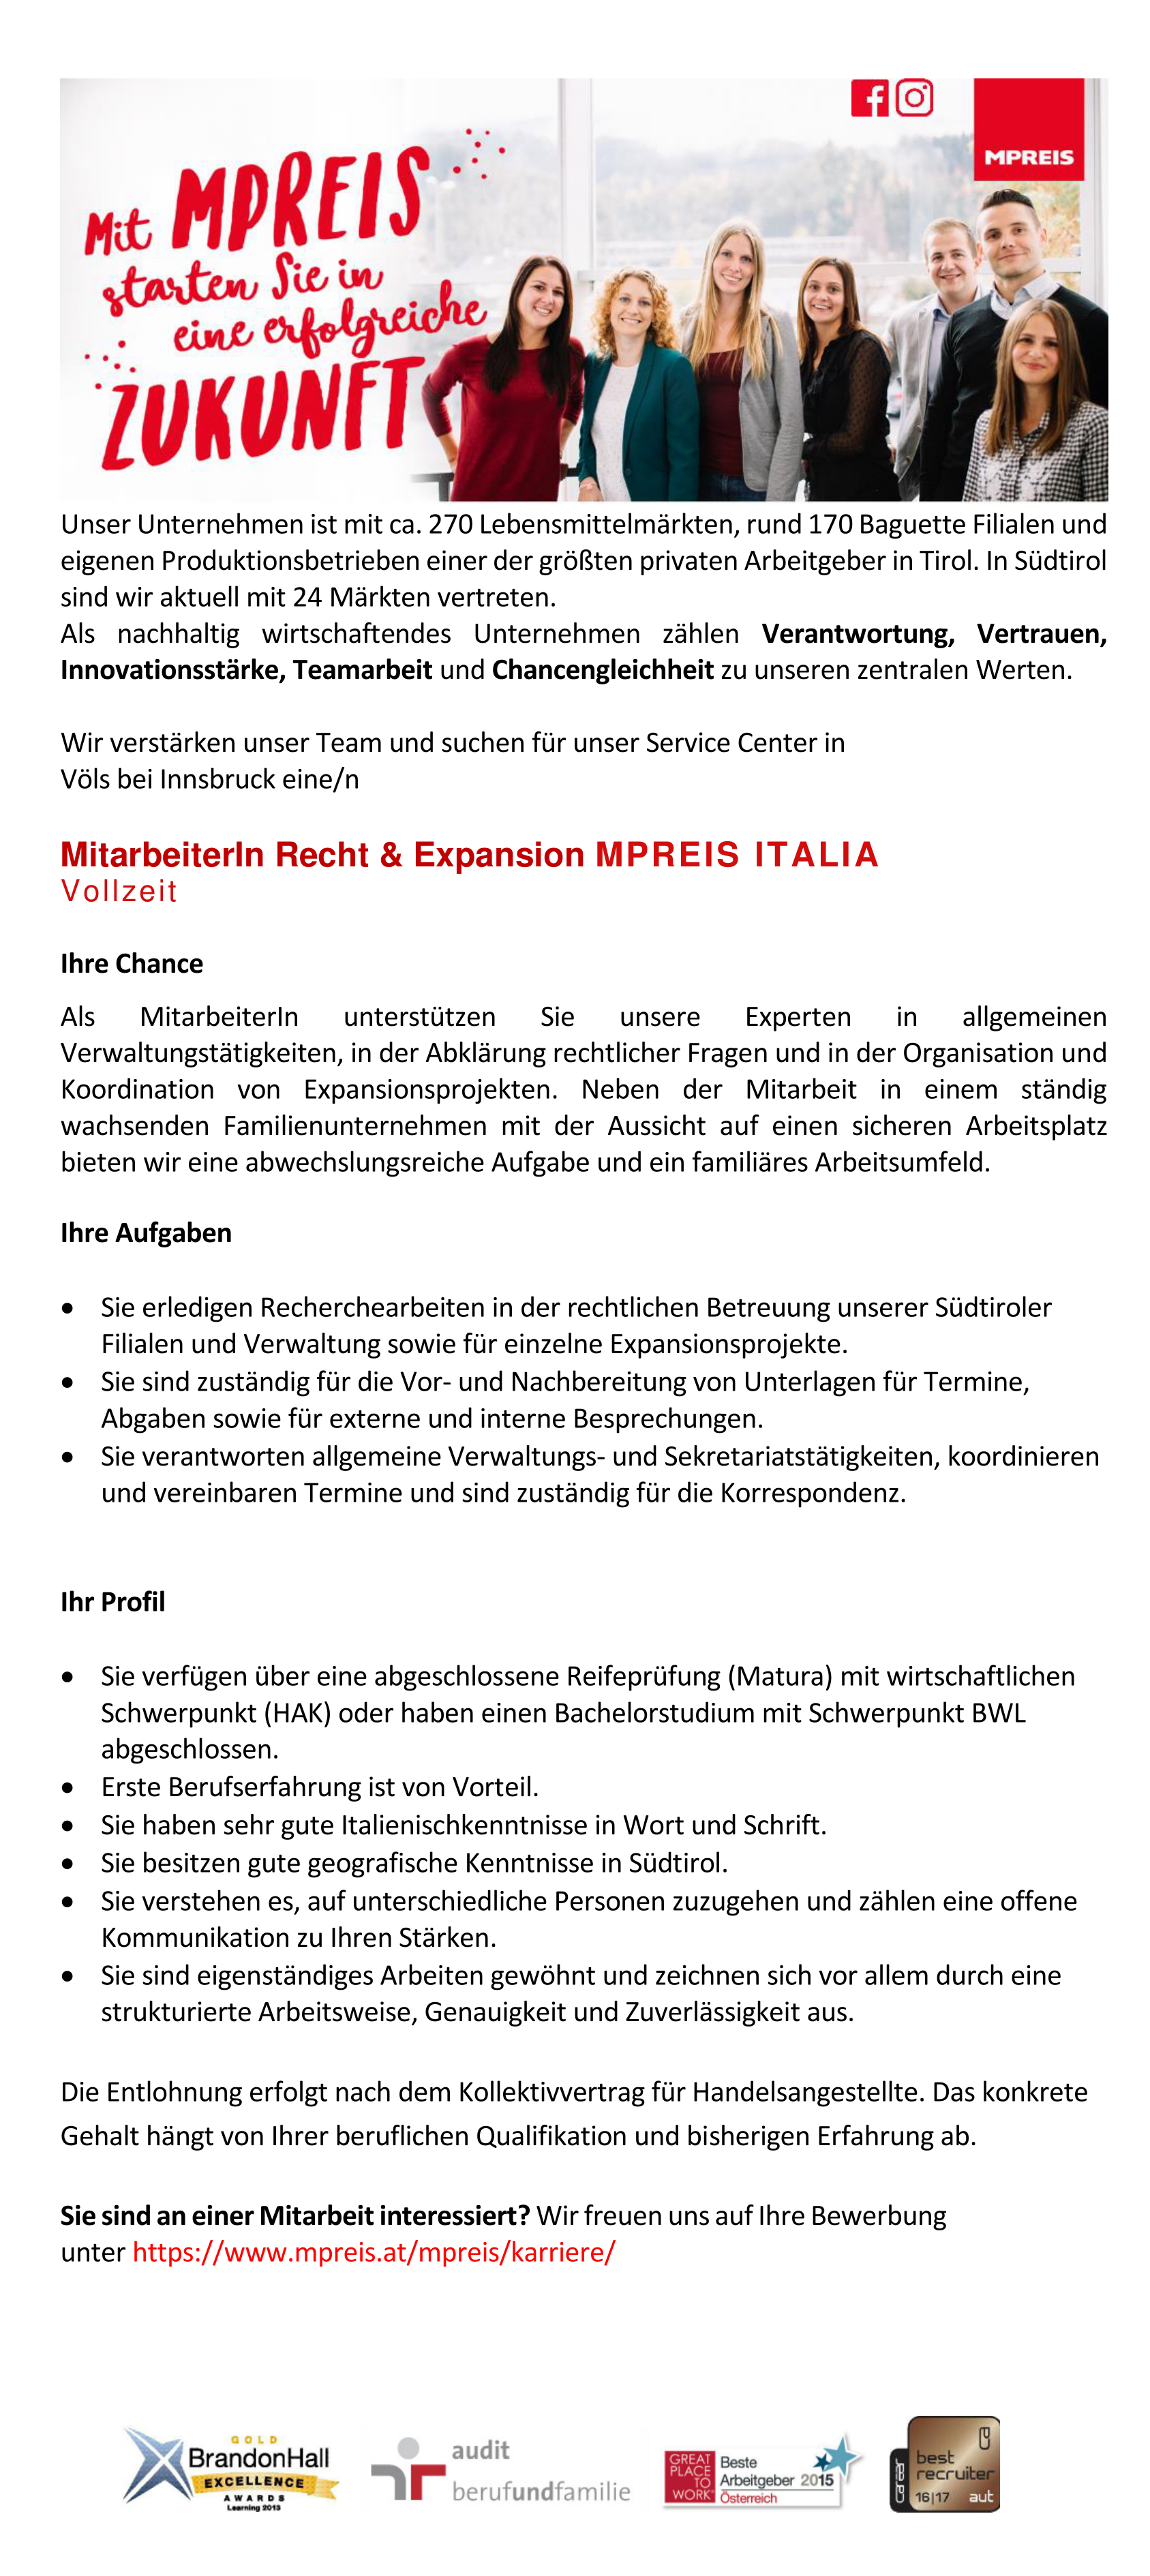 MitarbeiterIn Recht & Expansion MPREIS Italia